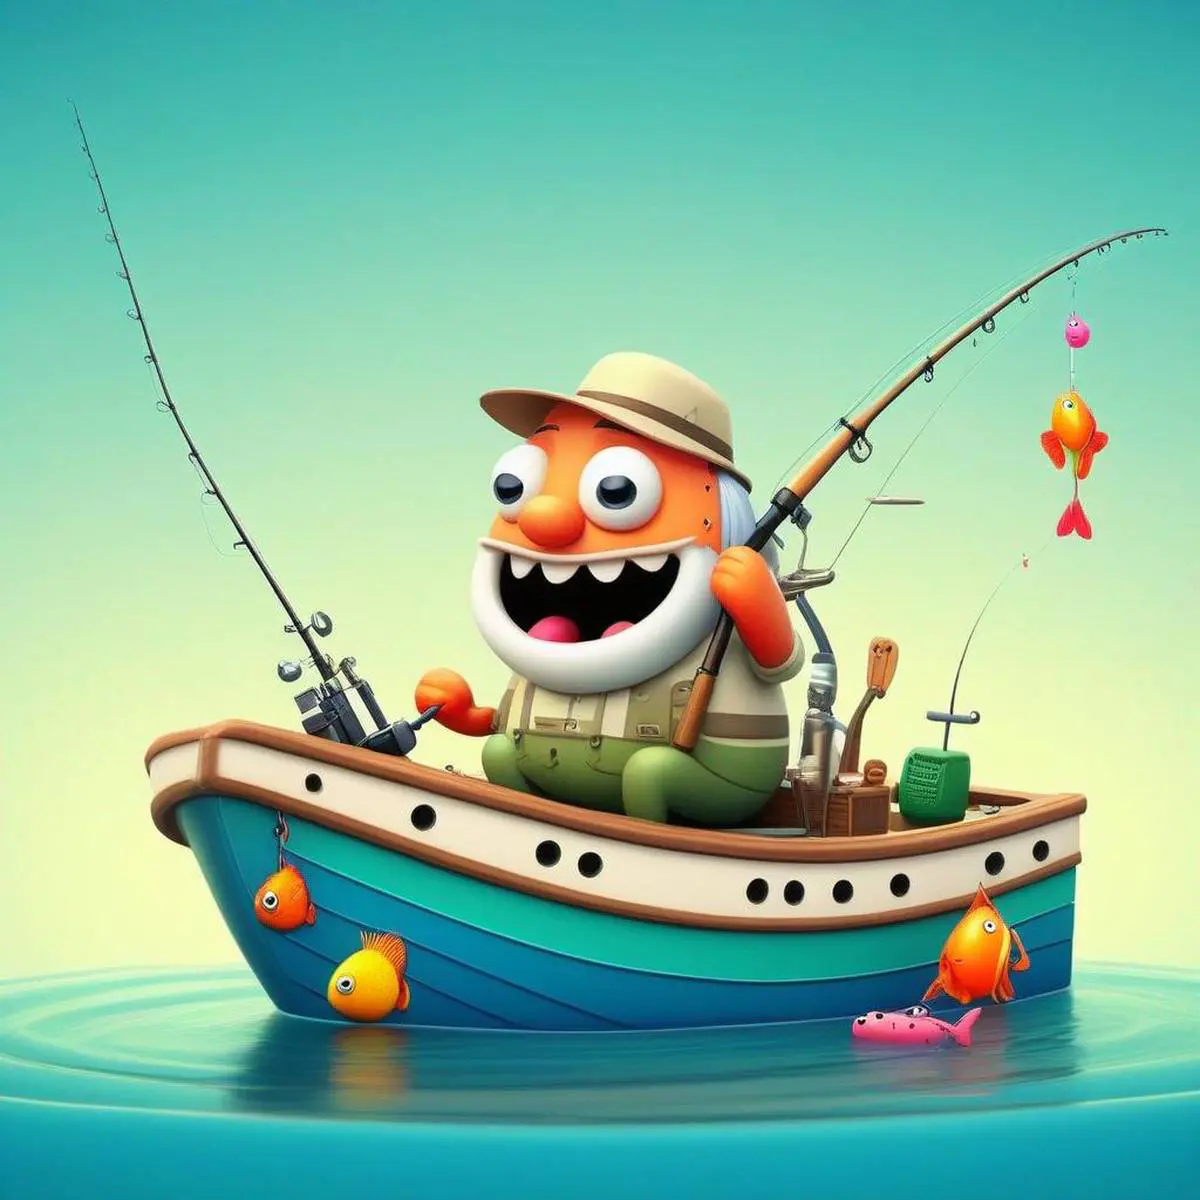 Fishing puns